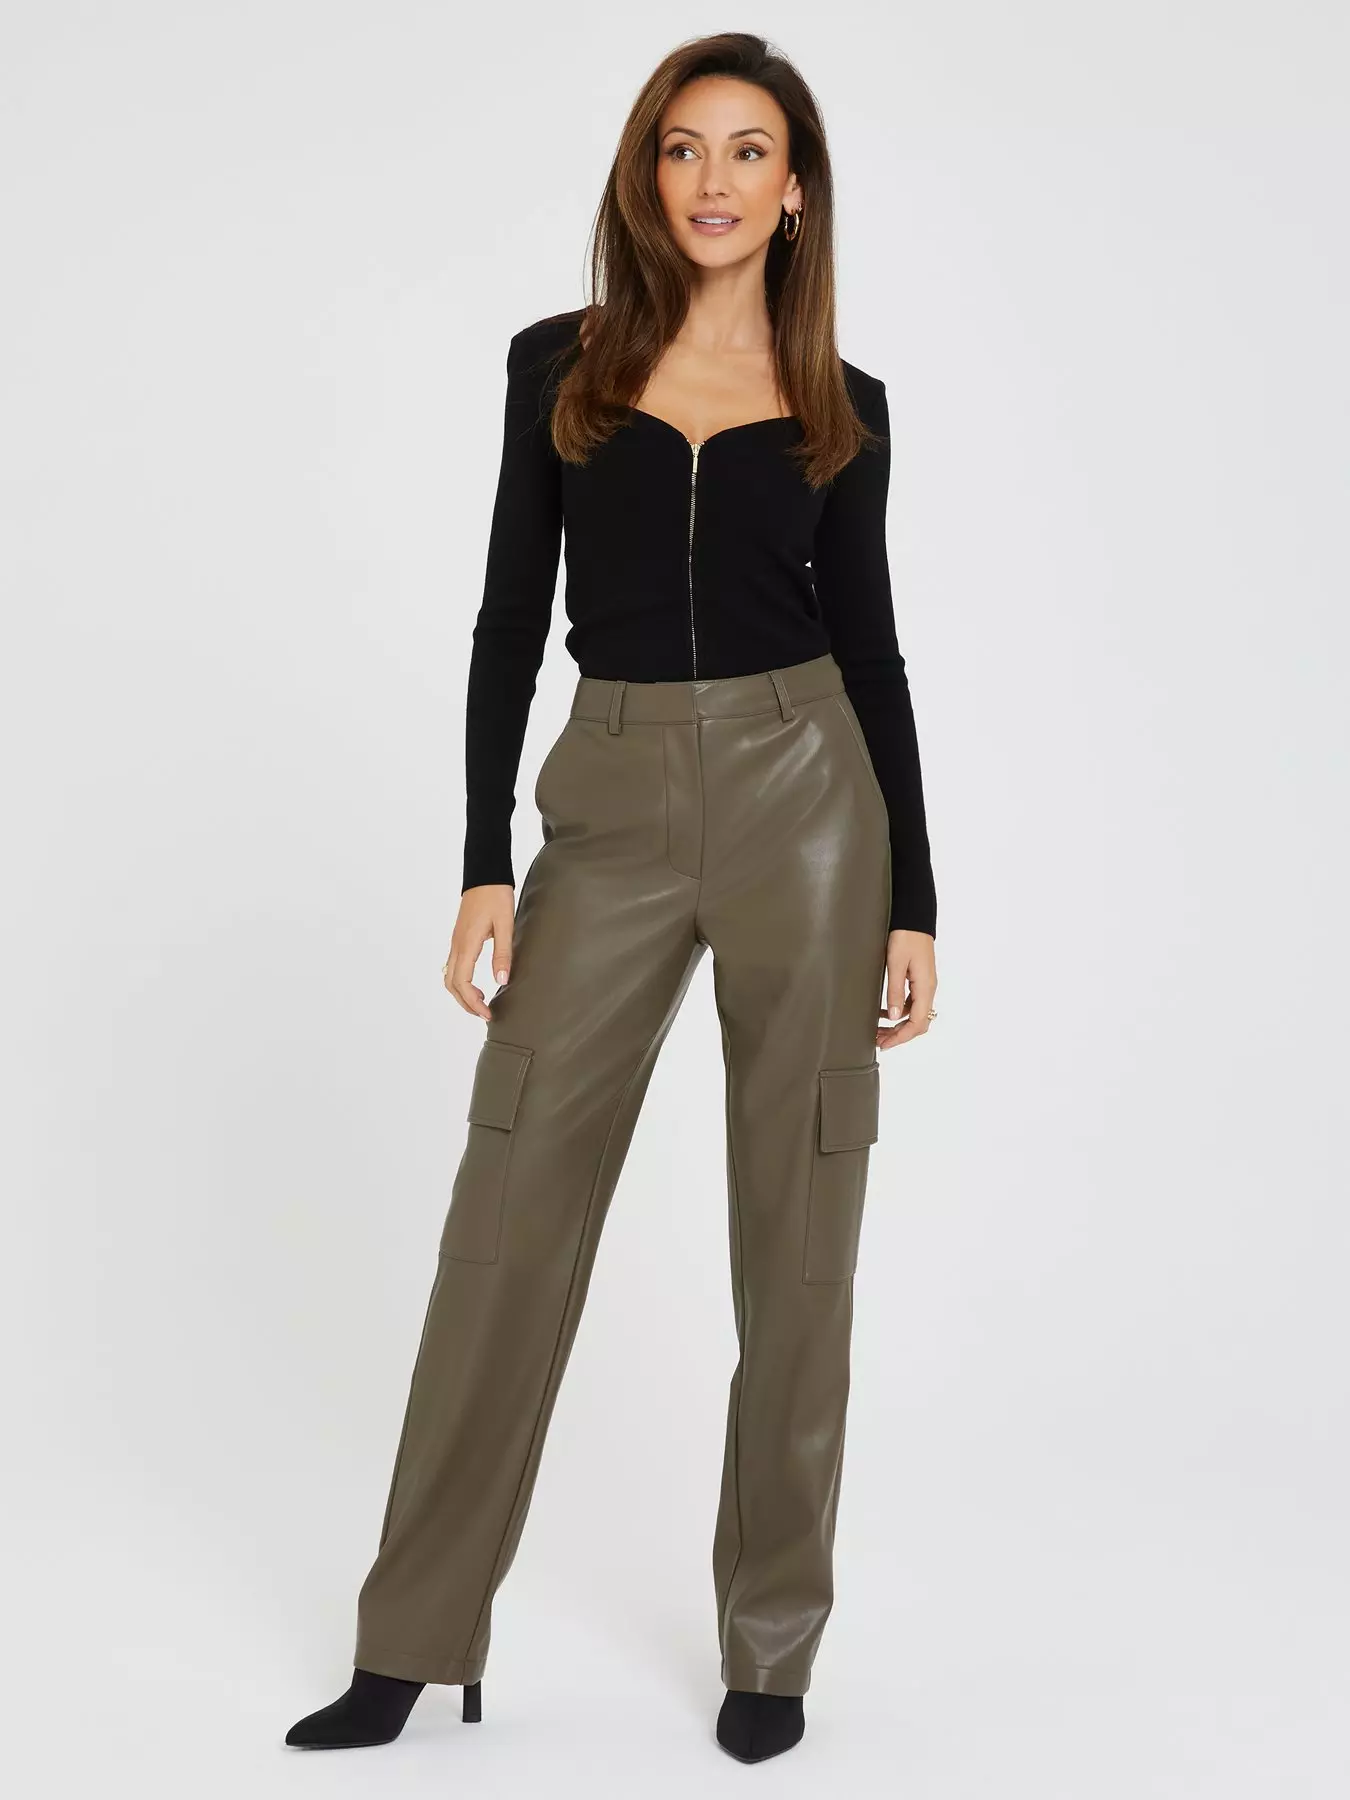 Women's Faux Leather Trousers & Pants